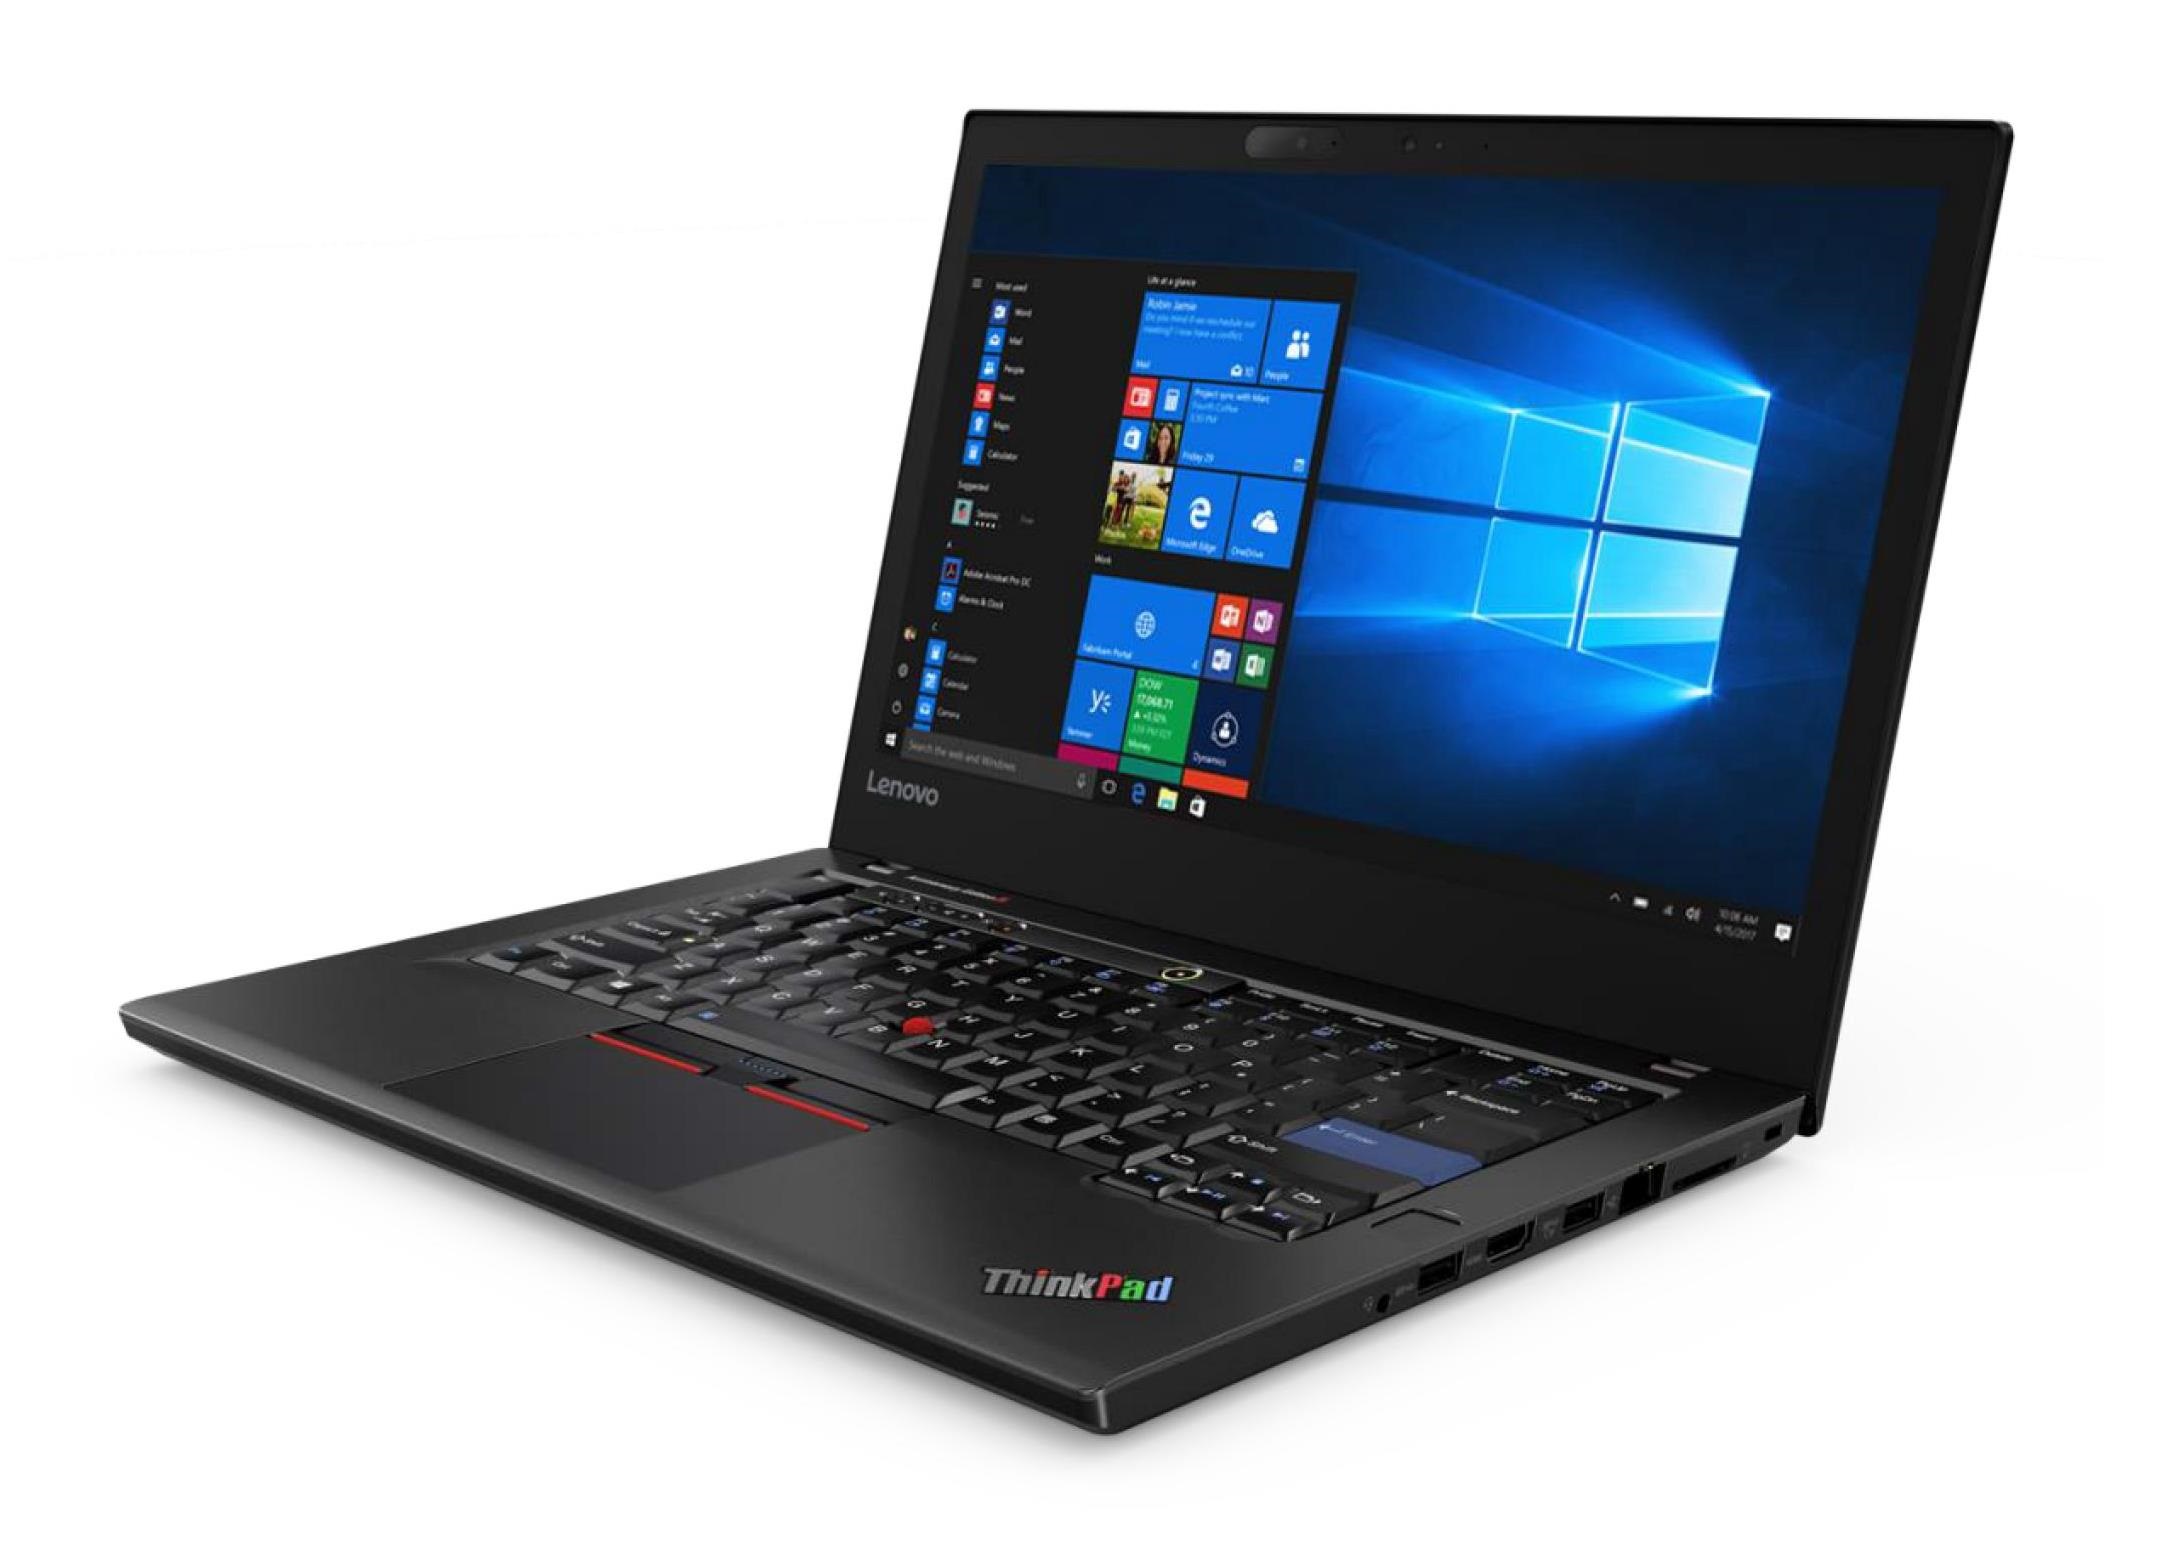 Lenovo ThinkPad 25 Anniversary Edition is $1900 USD sans Kaby Lake 